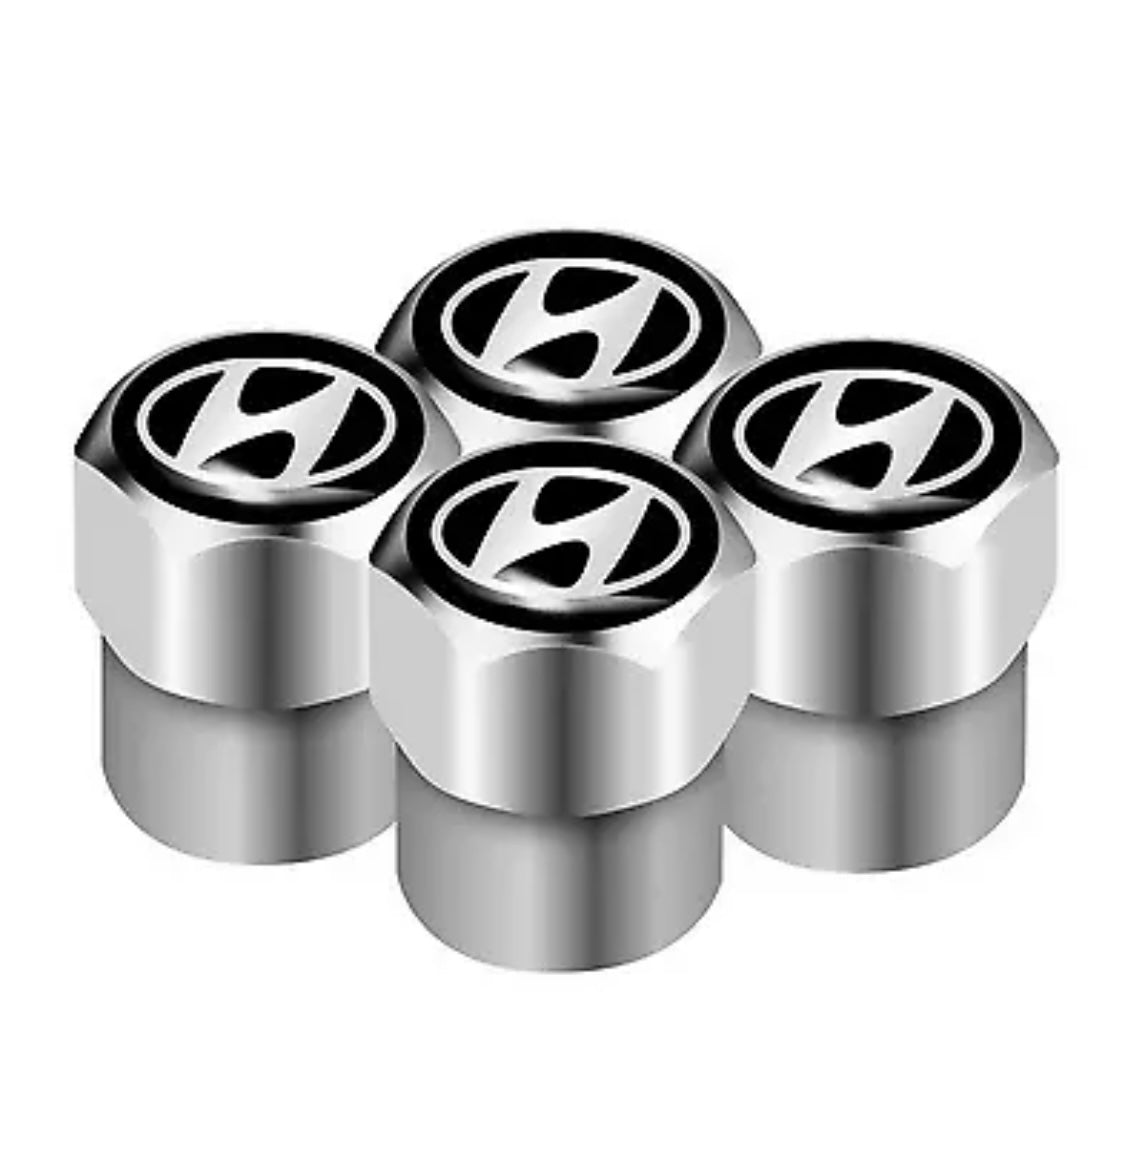 Hyundai Valve Caps - Silver